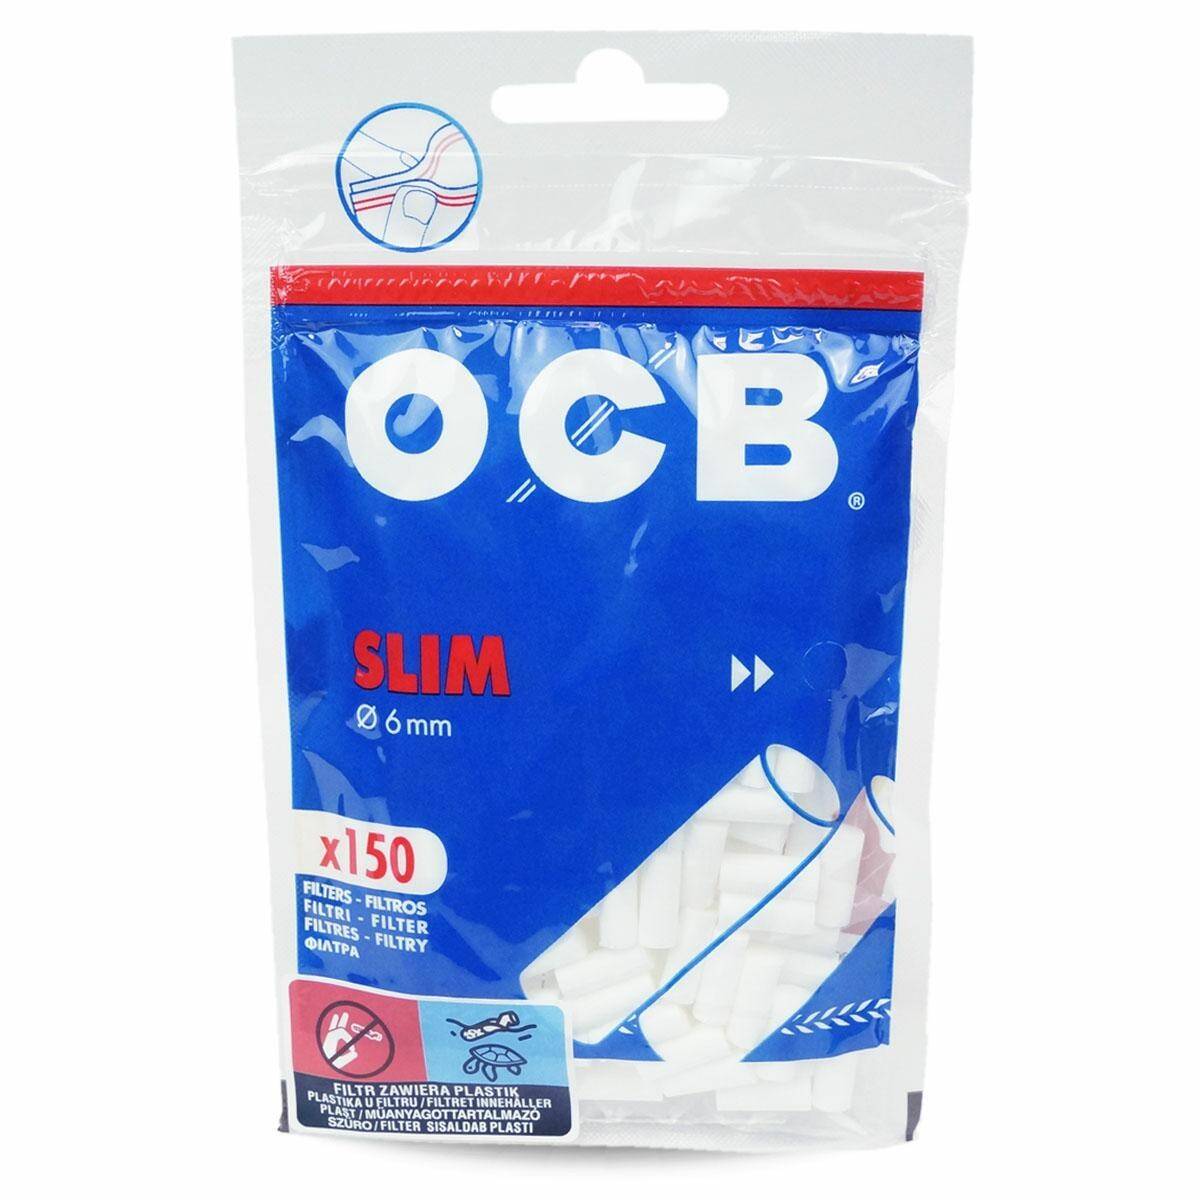 Filtry OCB fi6 Slim a`150